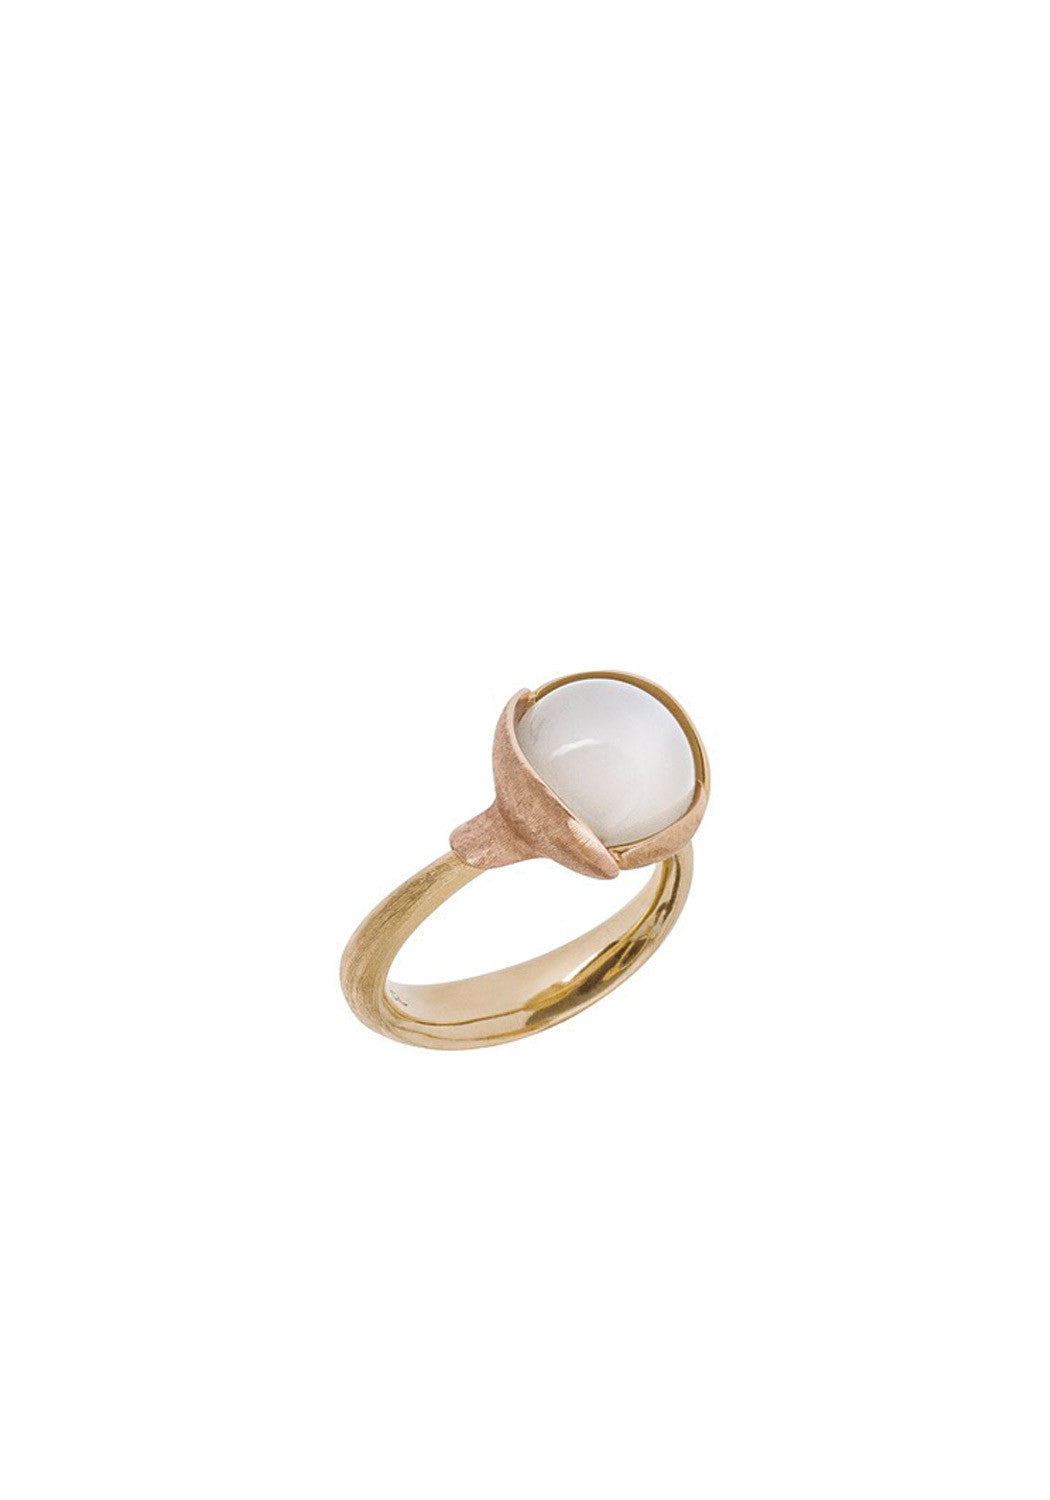 Ole Lynggaard Lotus 2 White Moonstone Ring | Ref. A2651-406 | OsterJewelers.com